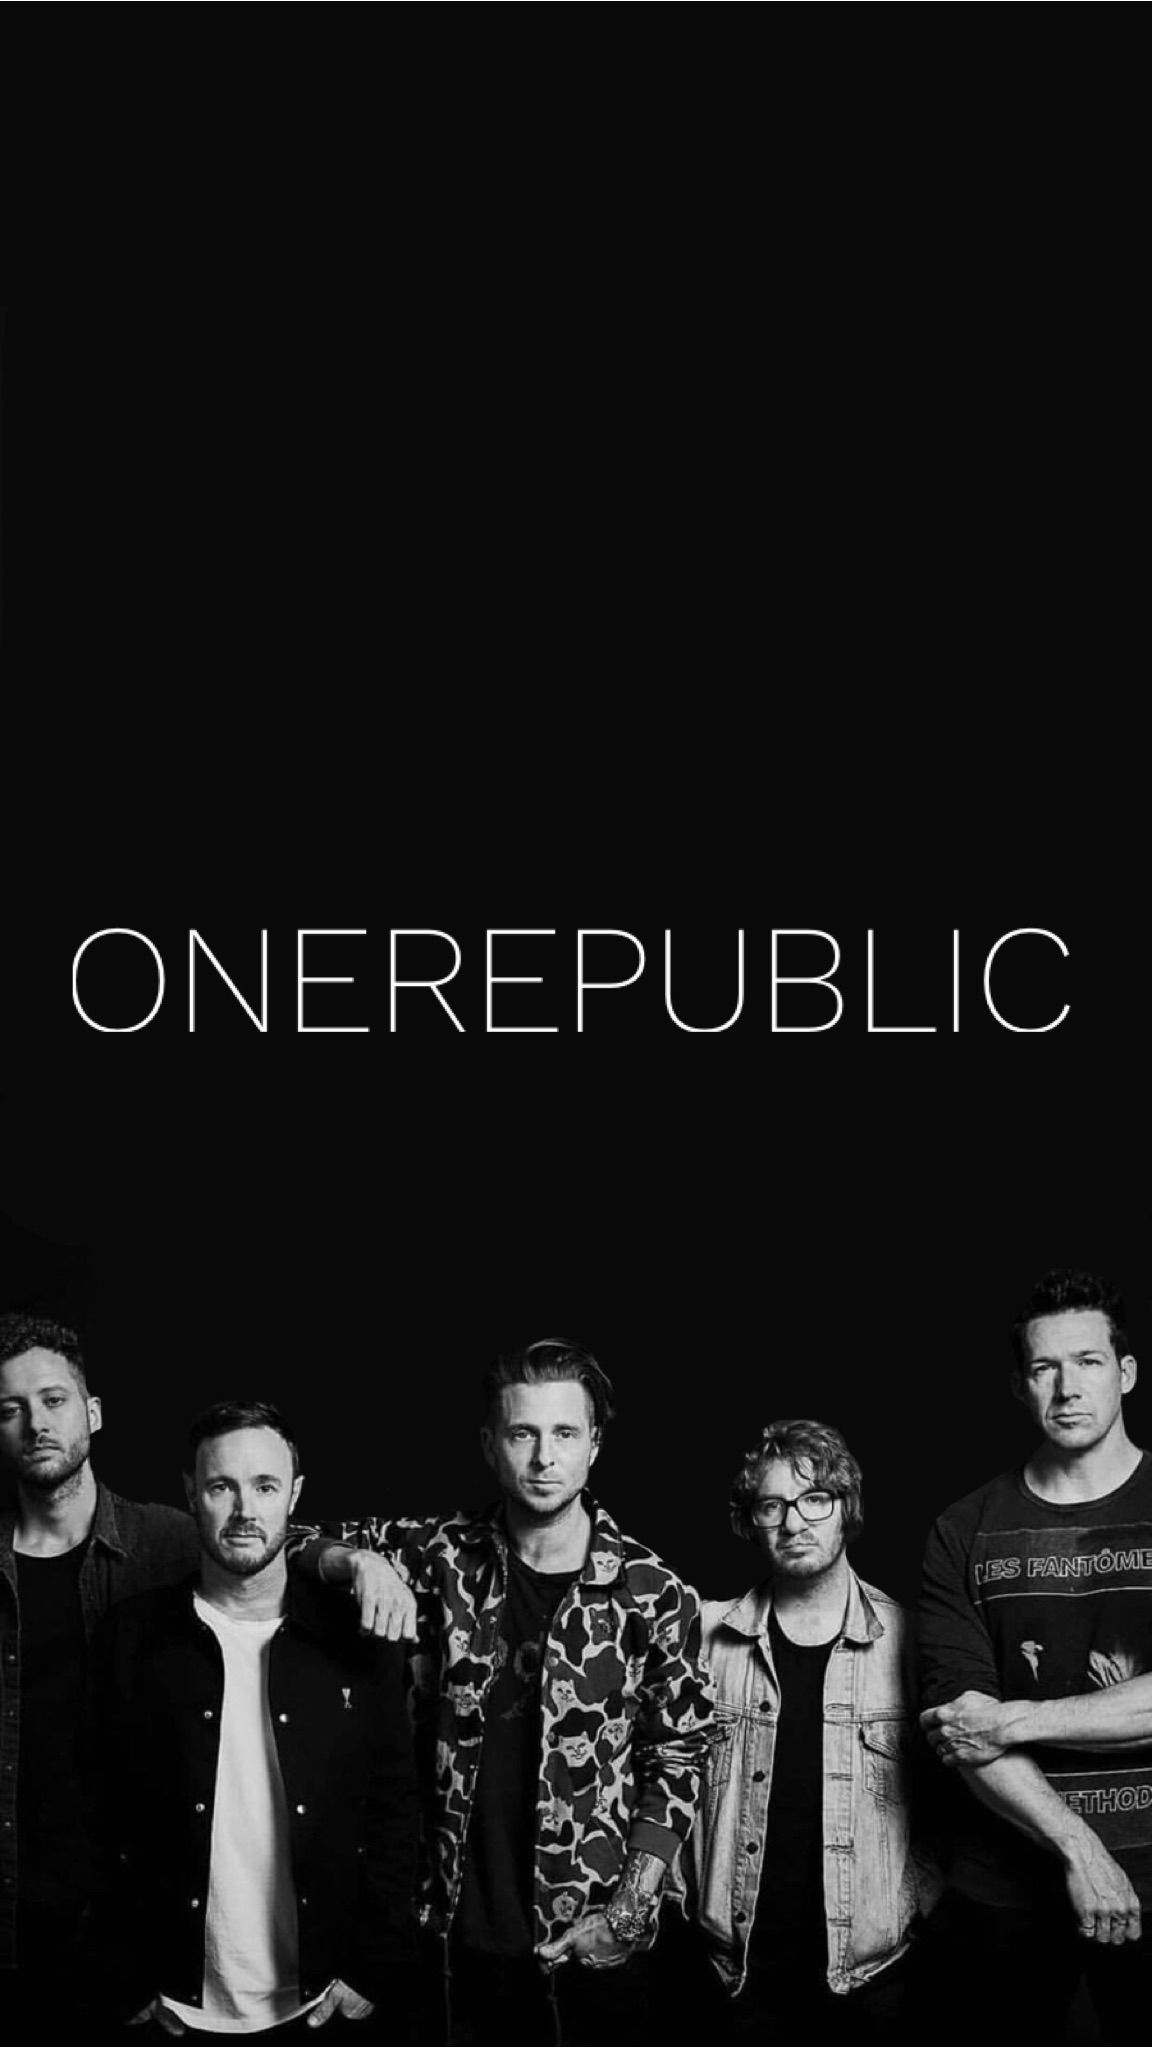 OneRepublic: An American, self-proclaimed "genreless", band, Black and white. 1160x2050 HD Wallpaper.